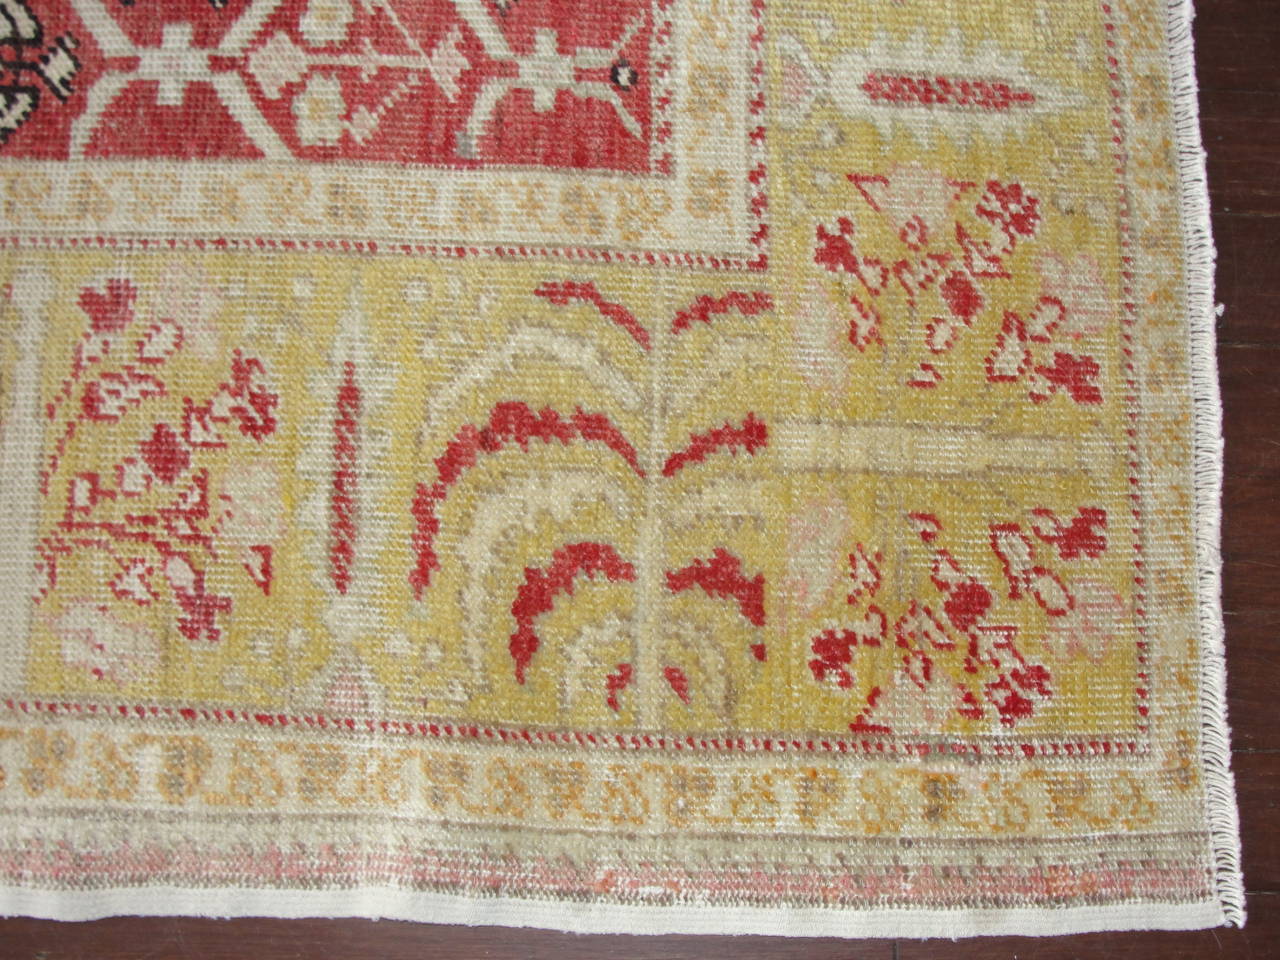 Early 20th Century Antique Turkish Oushak Rug, 4' x 5'4